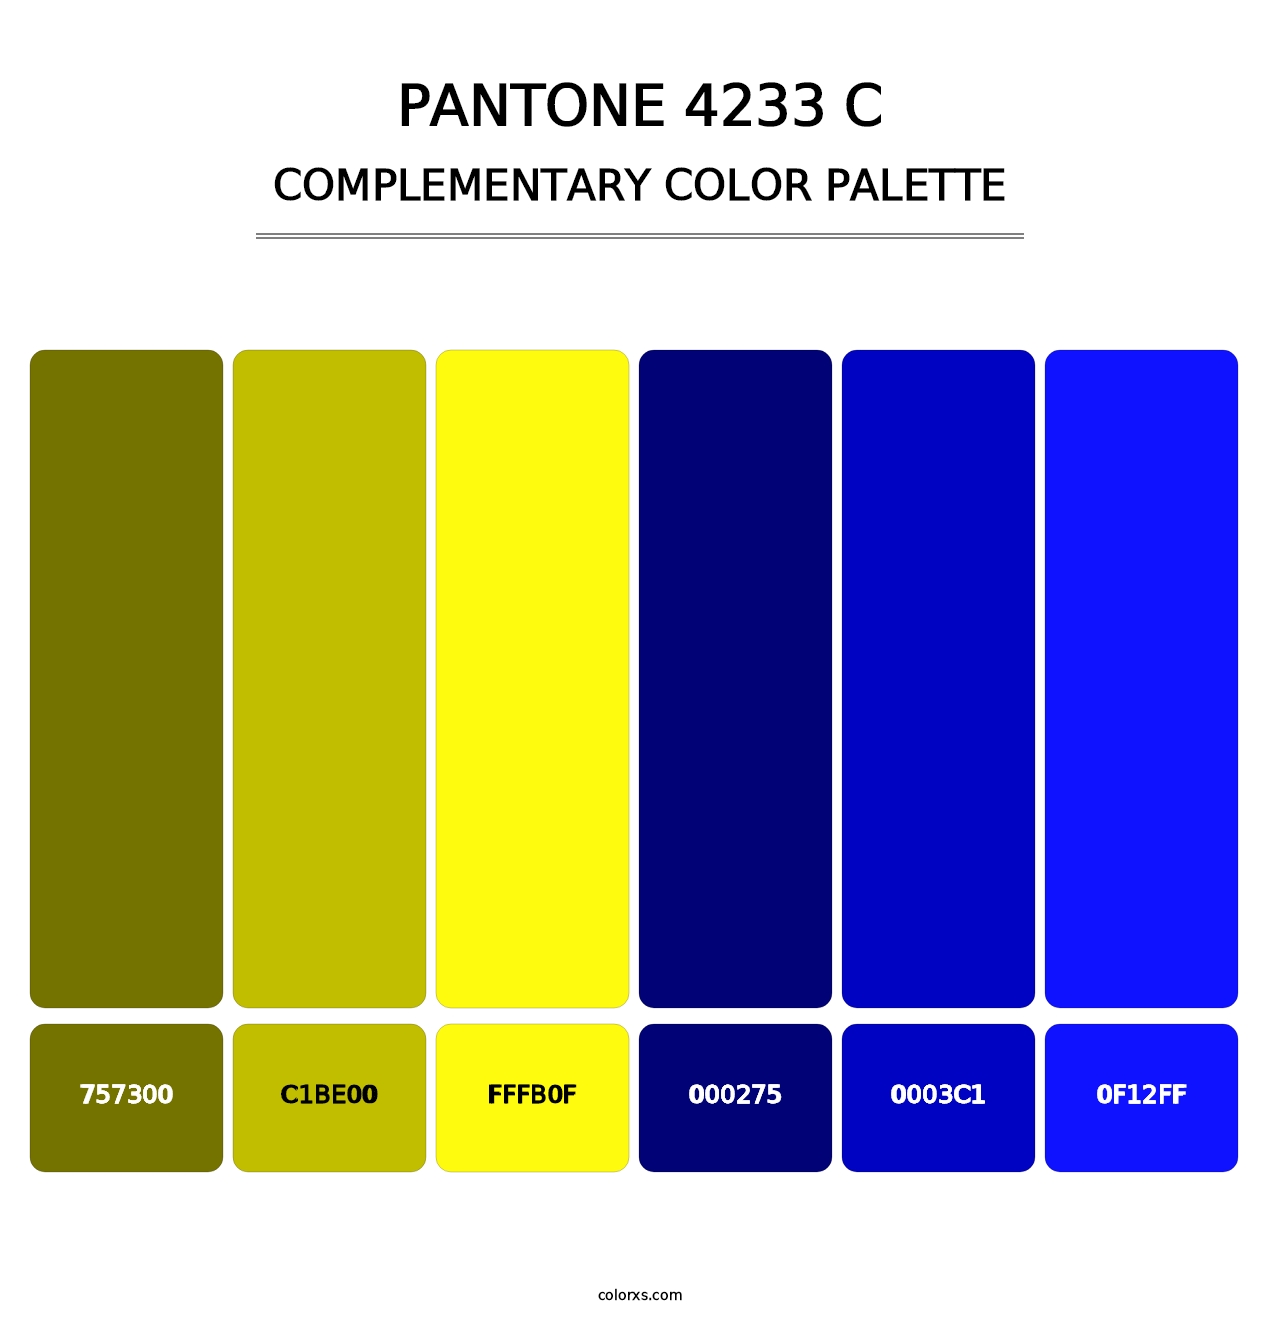 PANTONE 4233 C - Complementary Color Palette